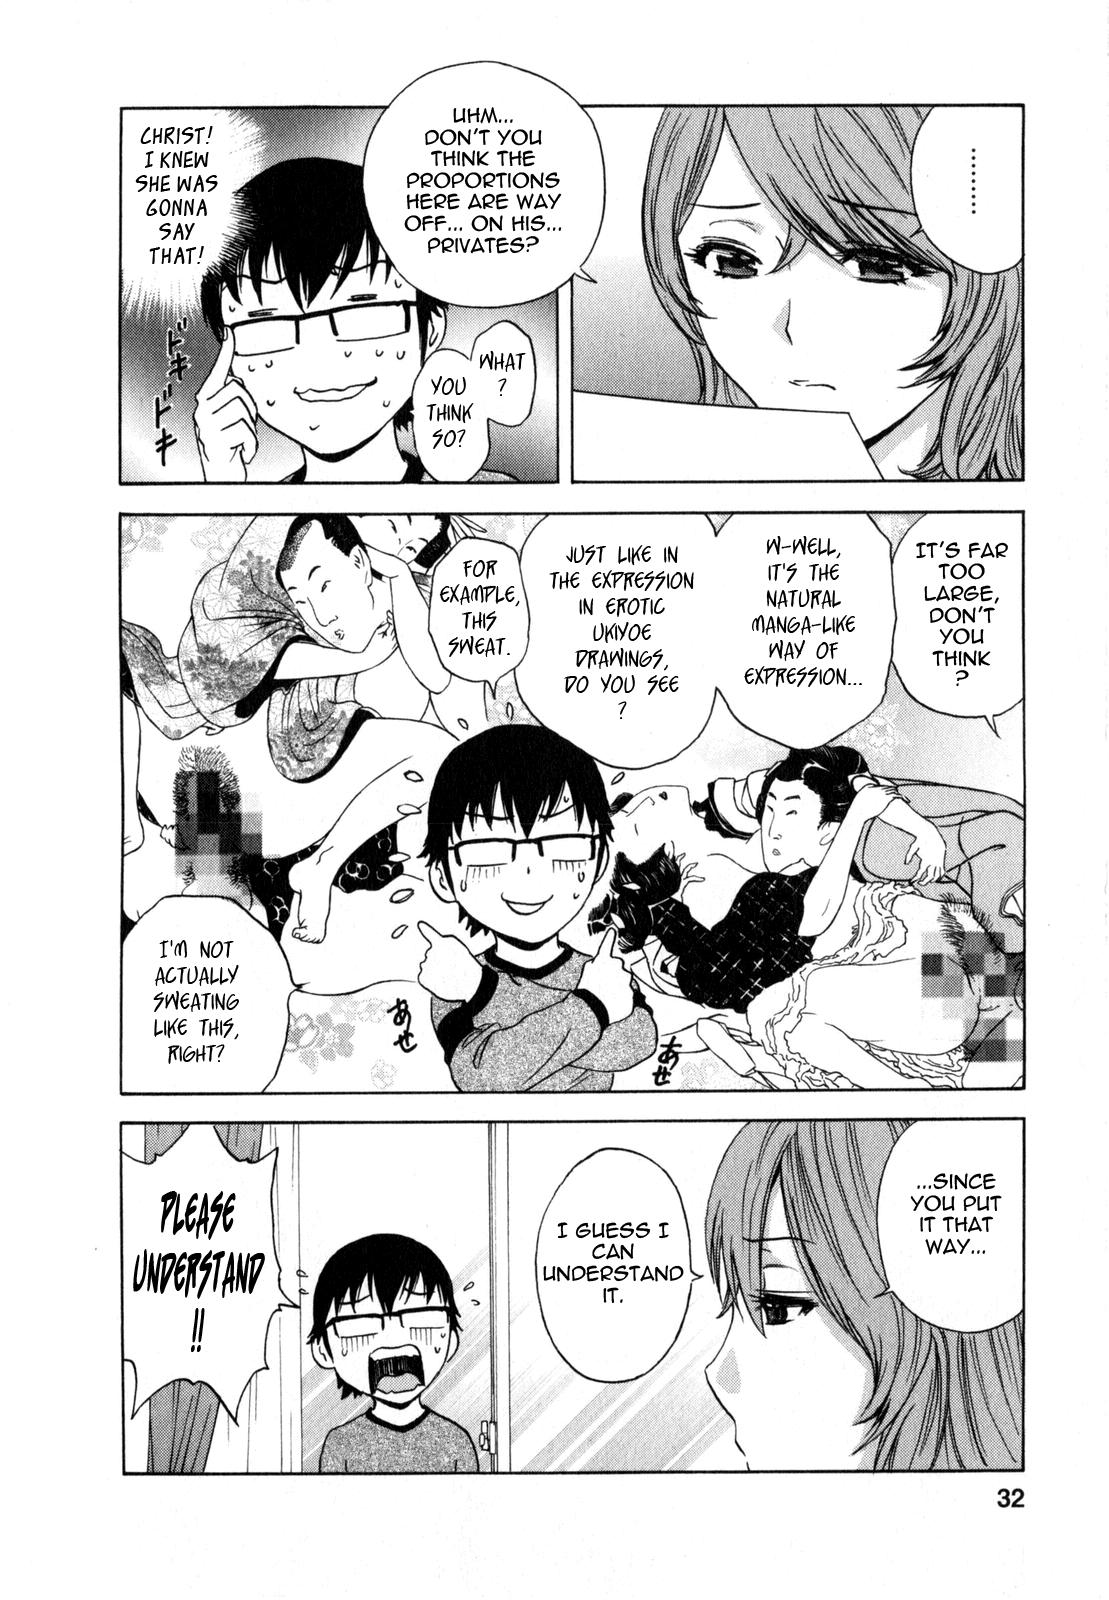 [Hidemaru] Life with Married Women Just Like a Manga 2 - Ch. 1-8 [English] {Tadanohito} 32